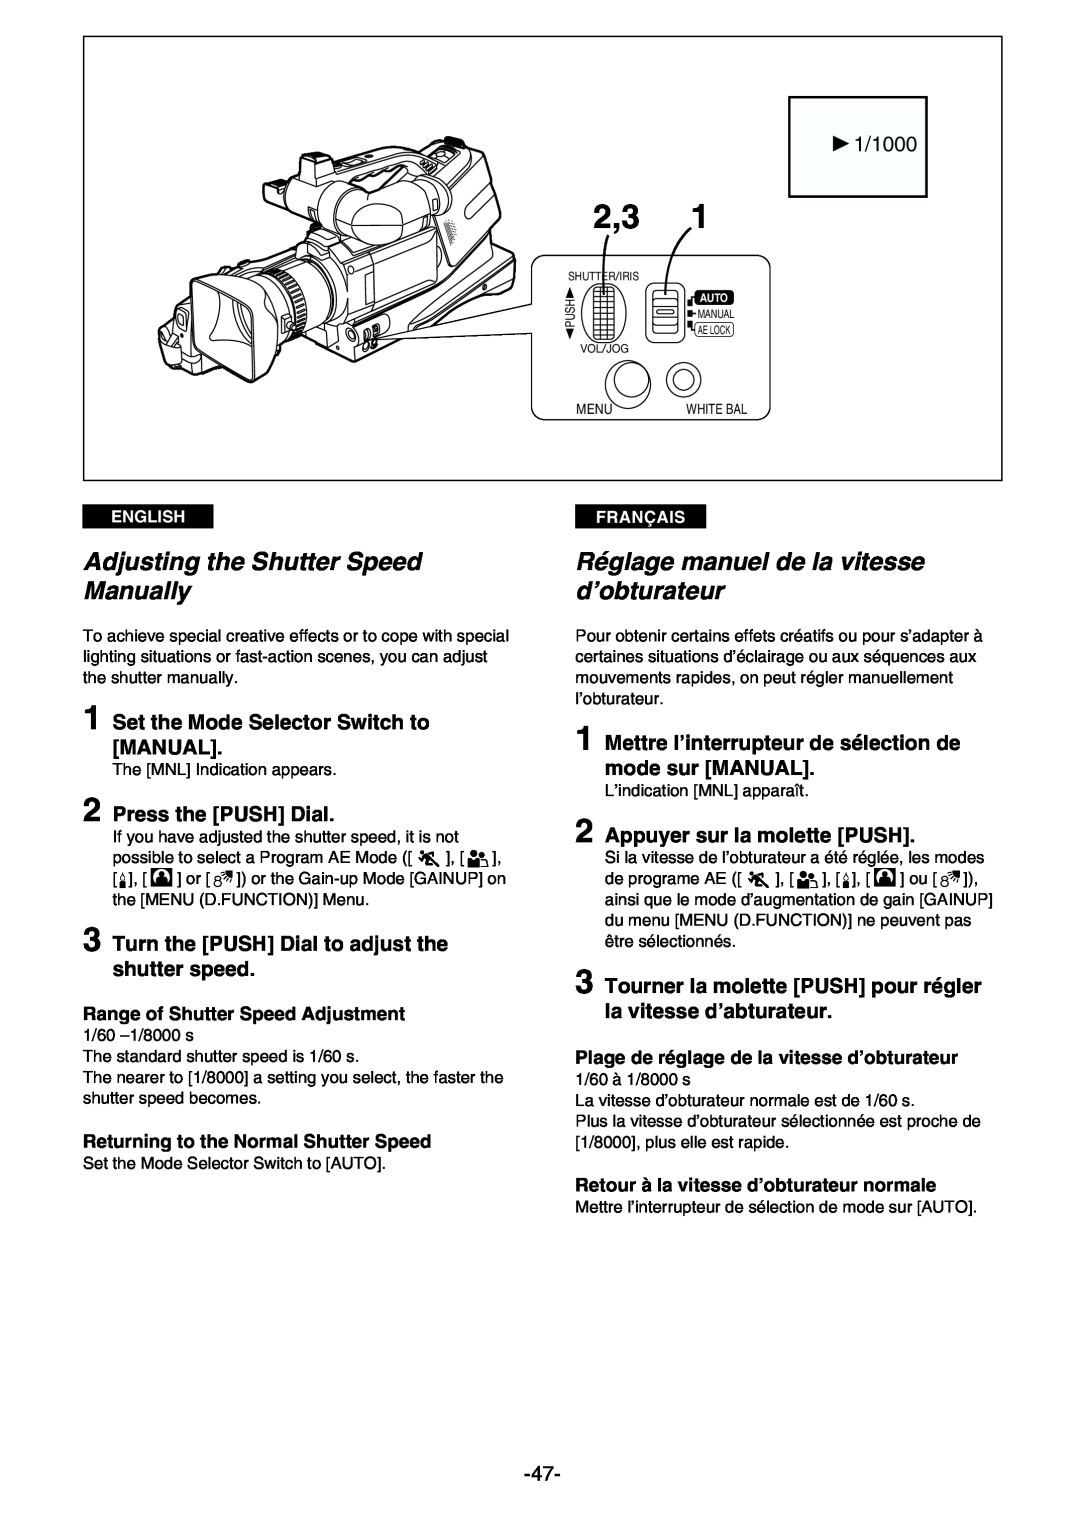 Panasonic AG- DVC 15P Adjusting the Shutter Speed Manually, Réglage manuel de la vitesse d’obturateur, 11/1000, English 